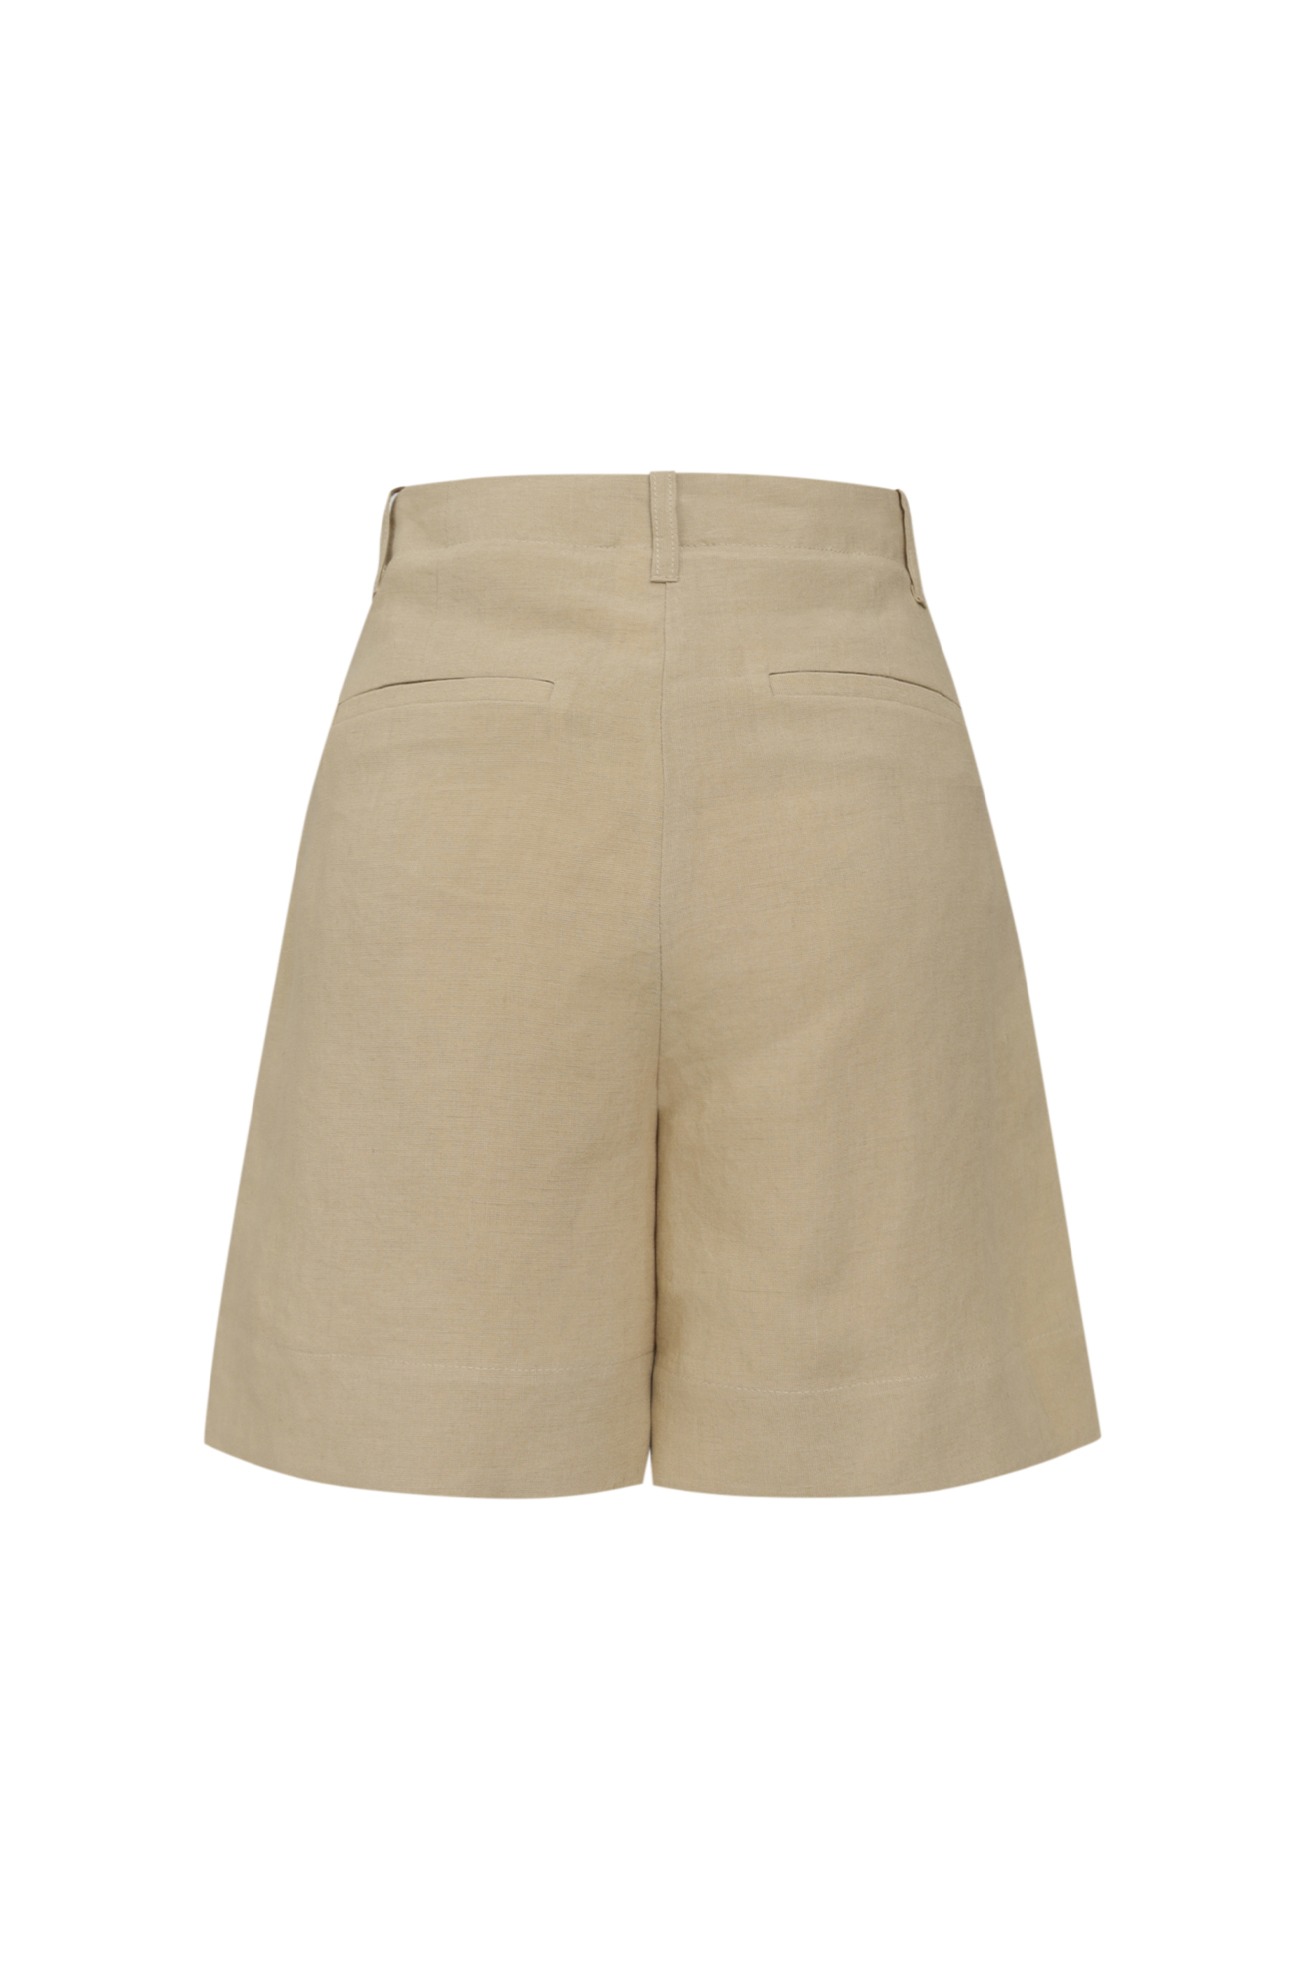 Simple Linen Shorts   6/7 순차발송